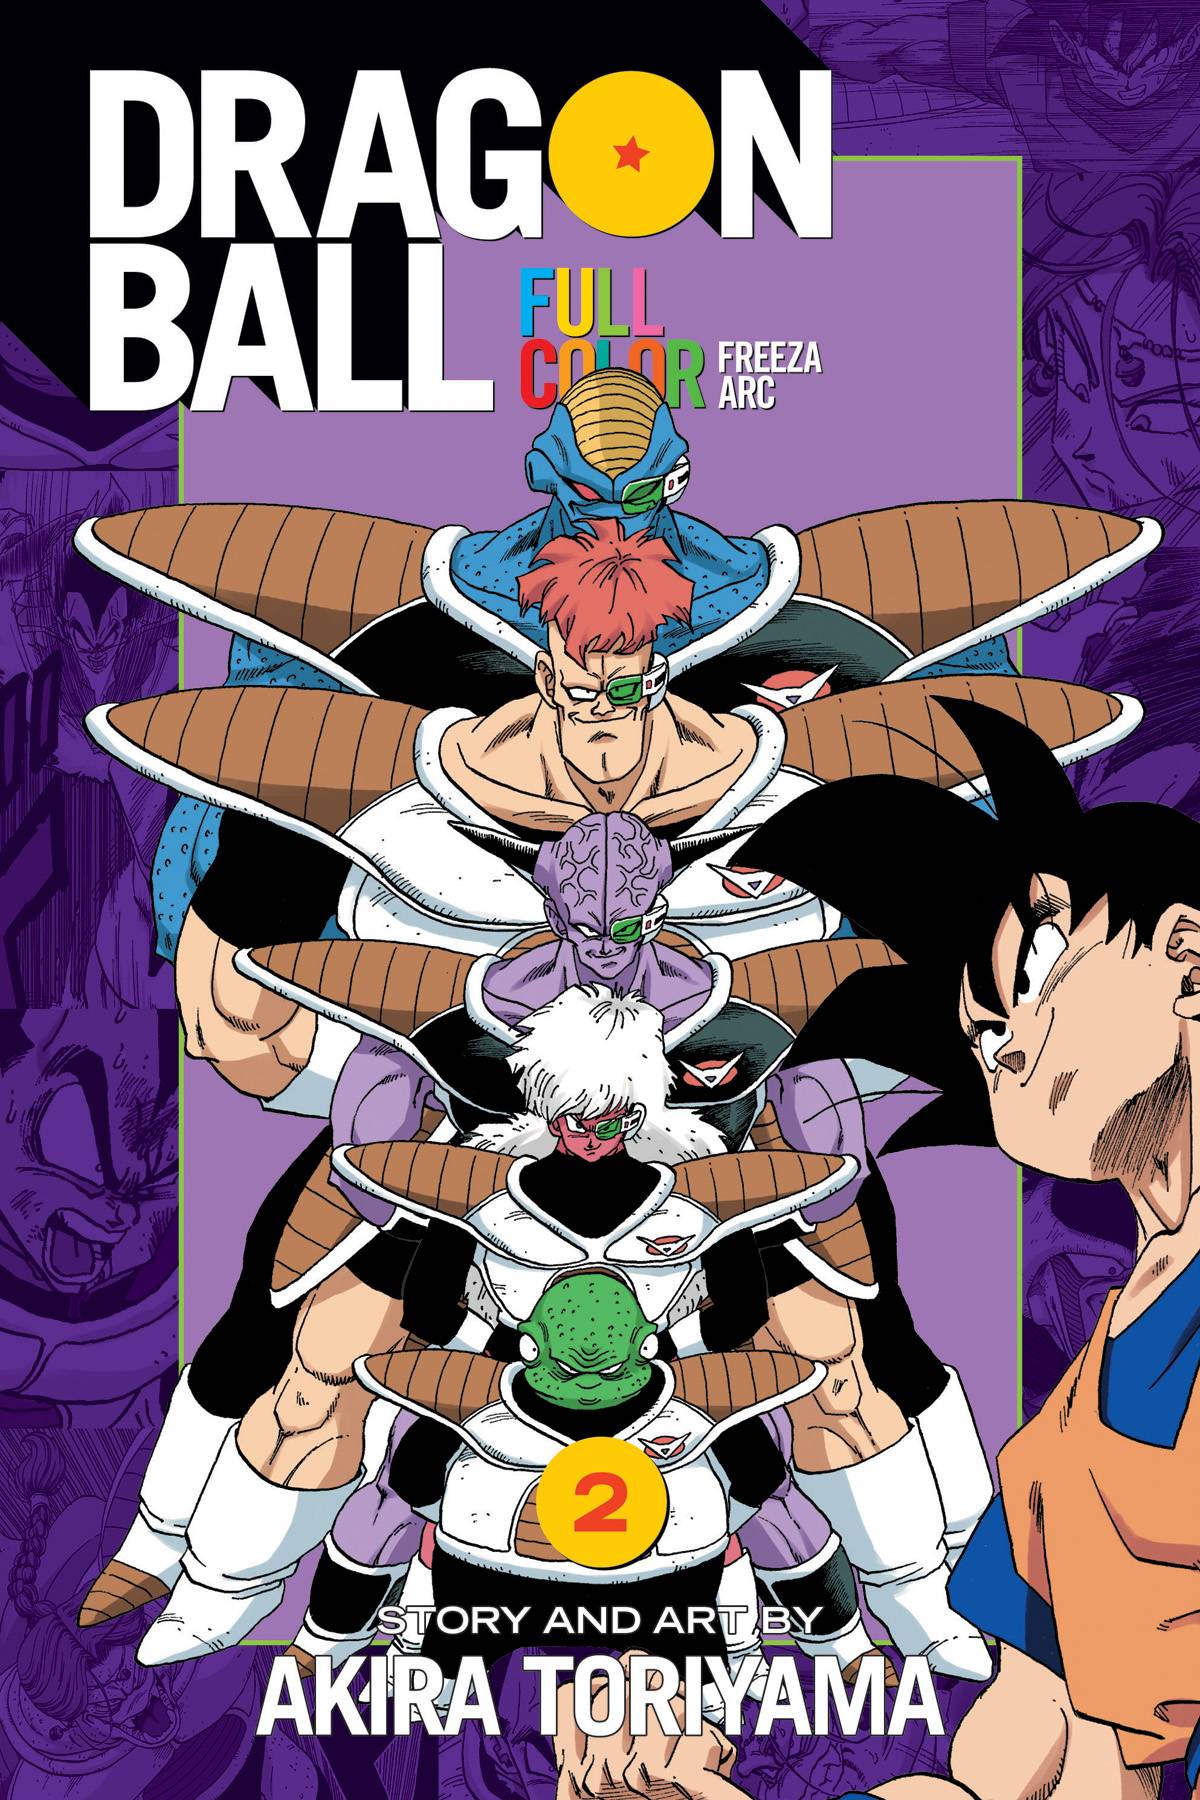 Dragon Ball Full Color Freeza Arc Manga Volume 2